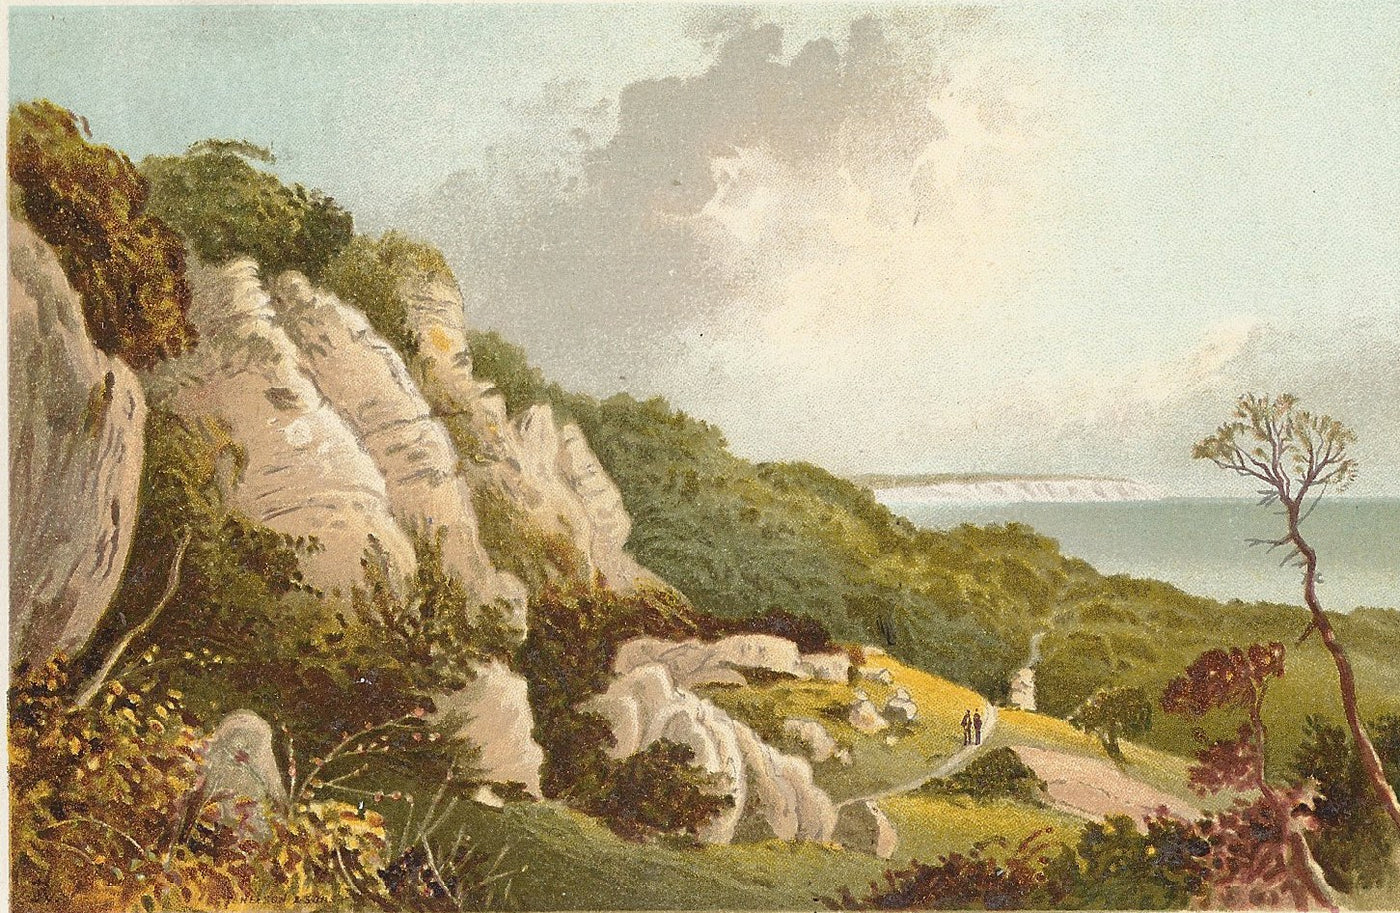 Ventnor landslip Isle of Wight antique print 1889